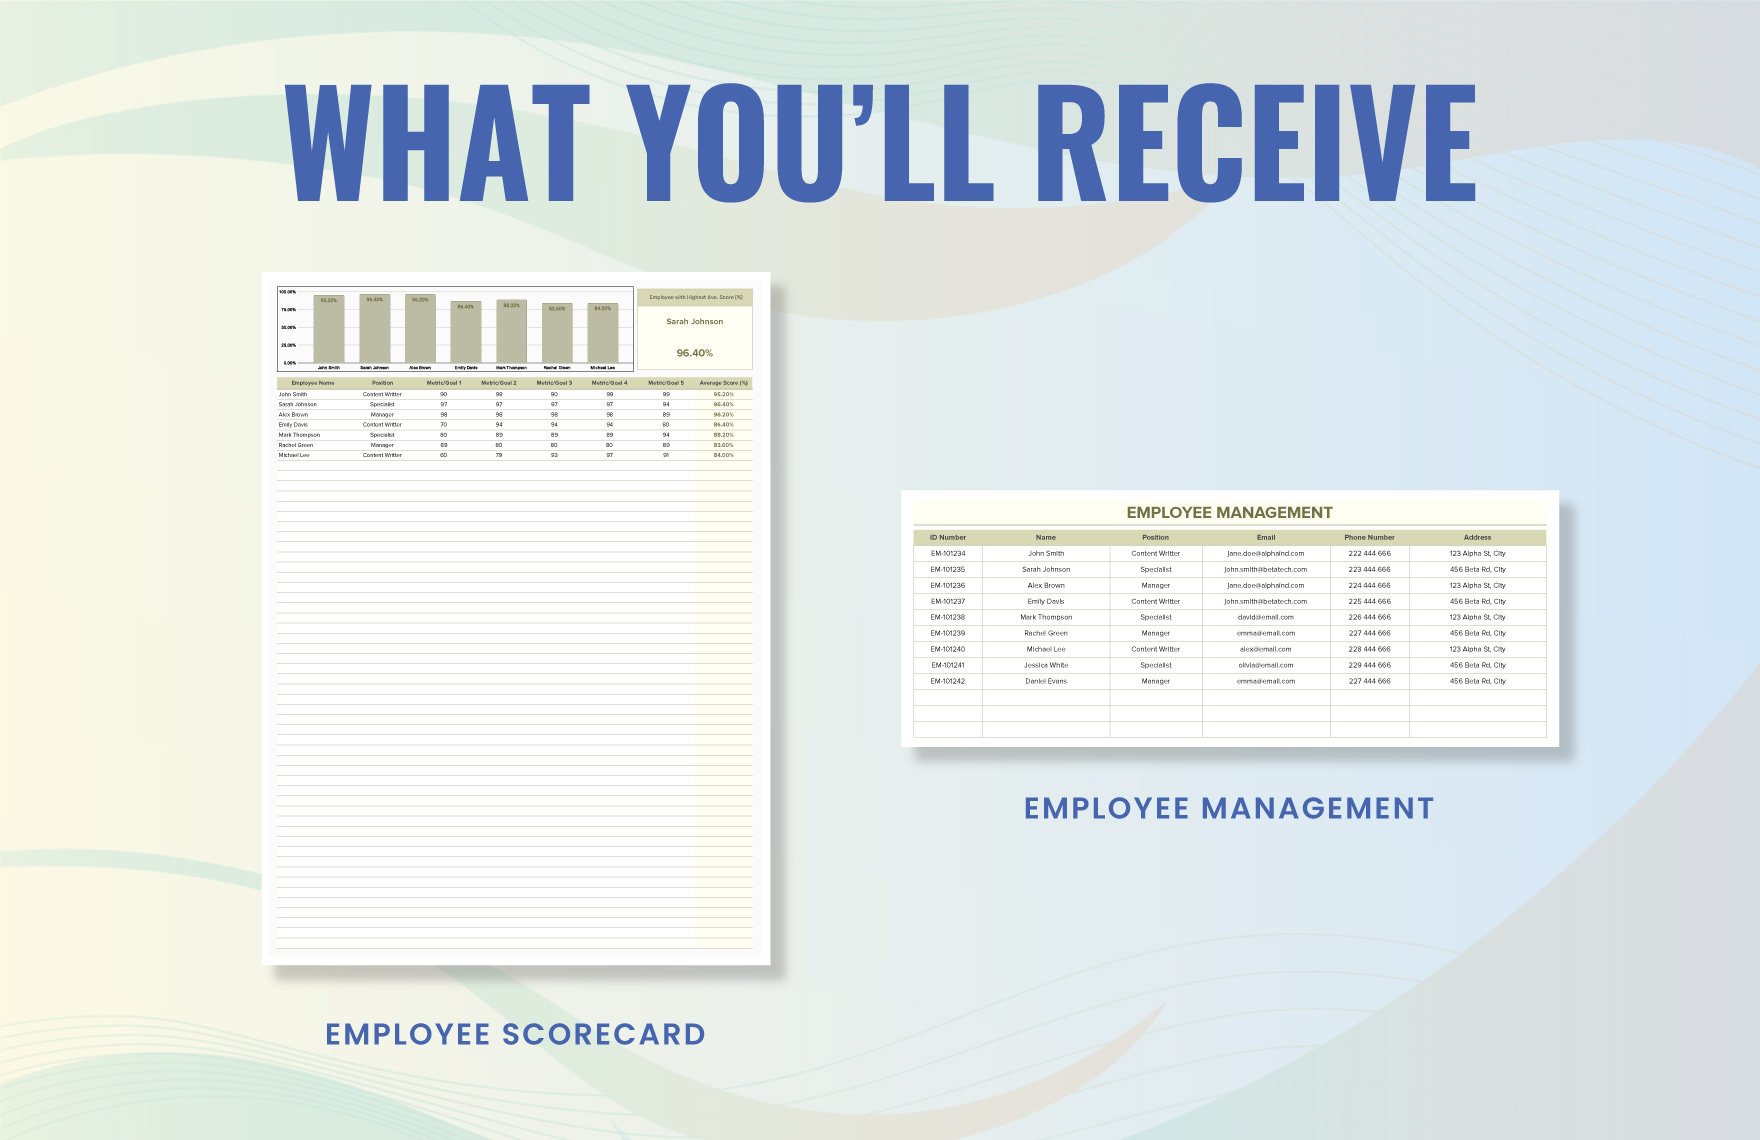 Employee Scorecard Template